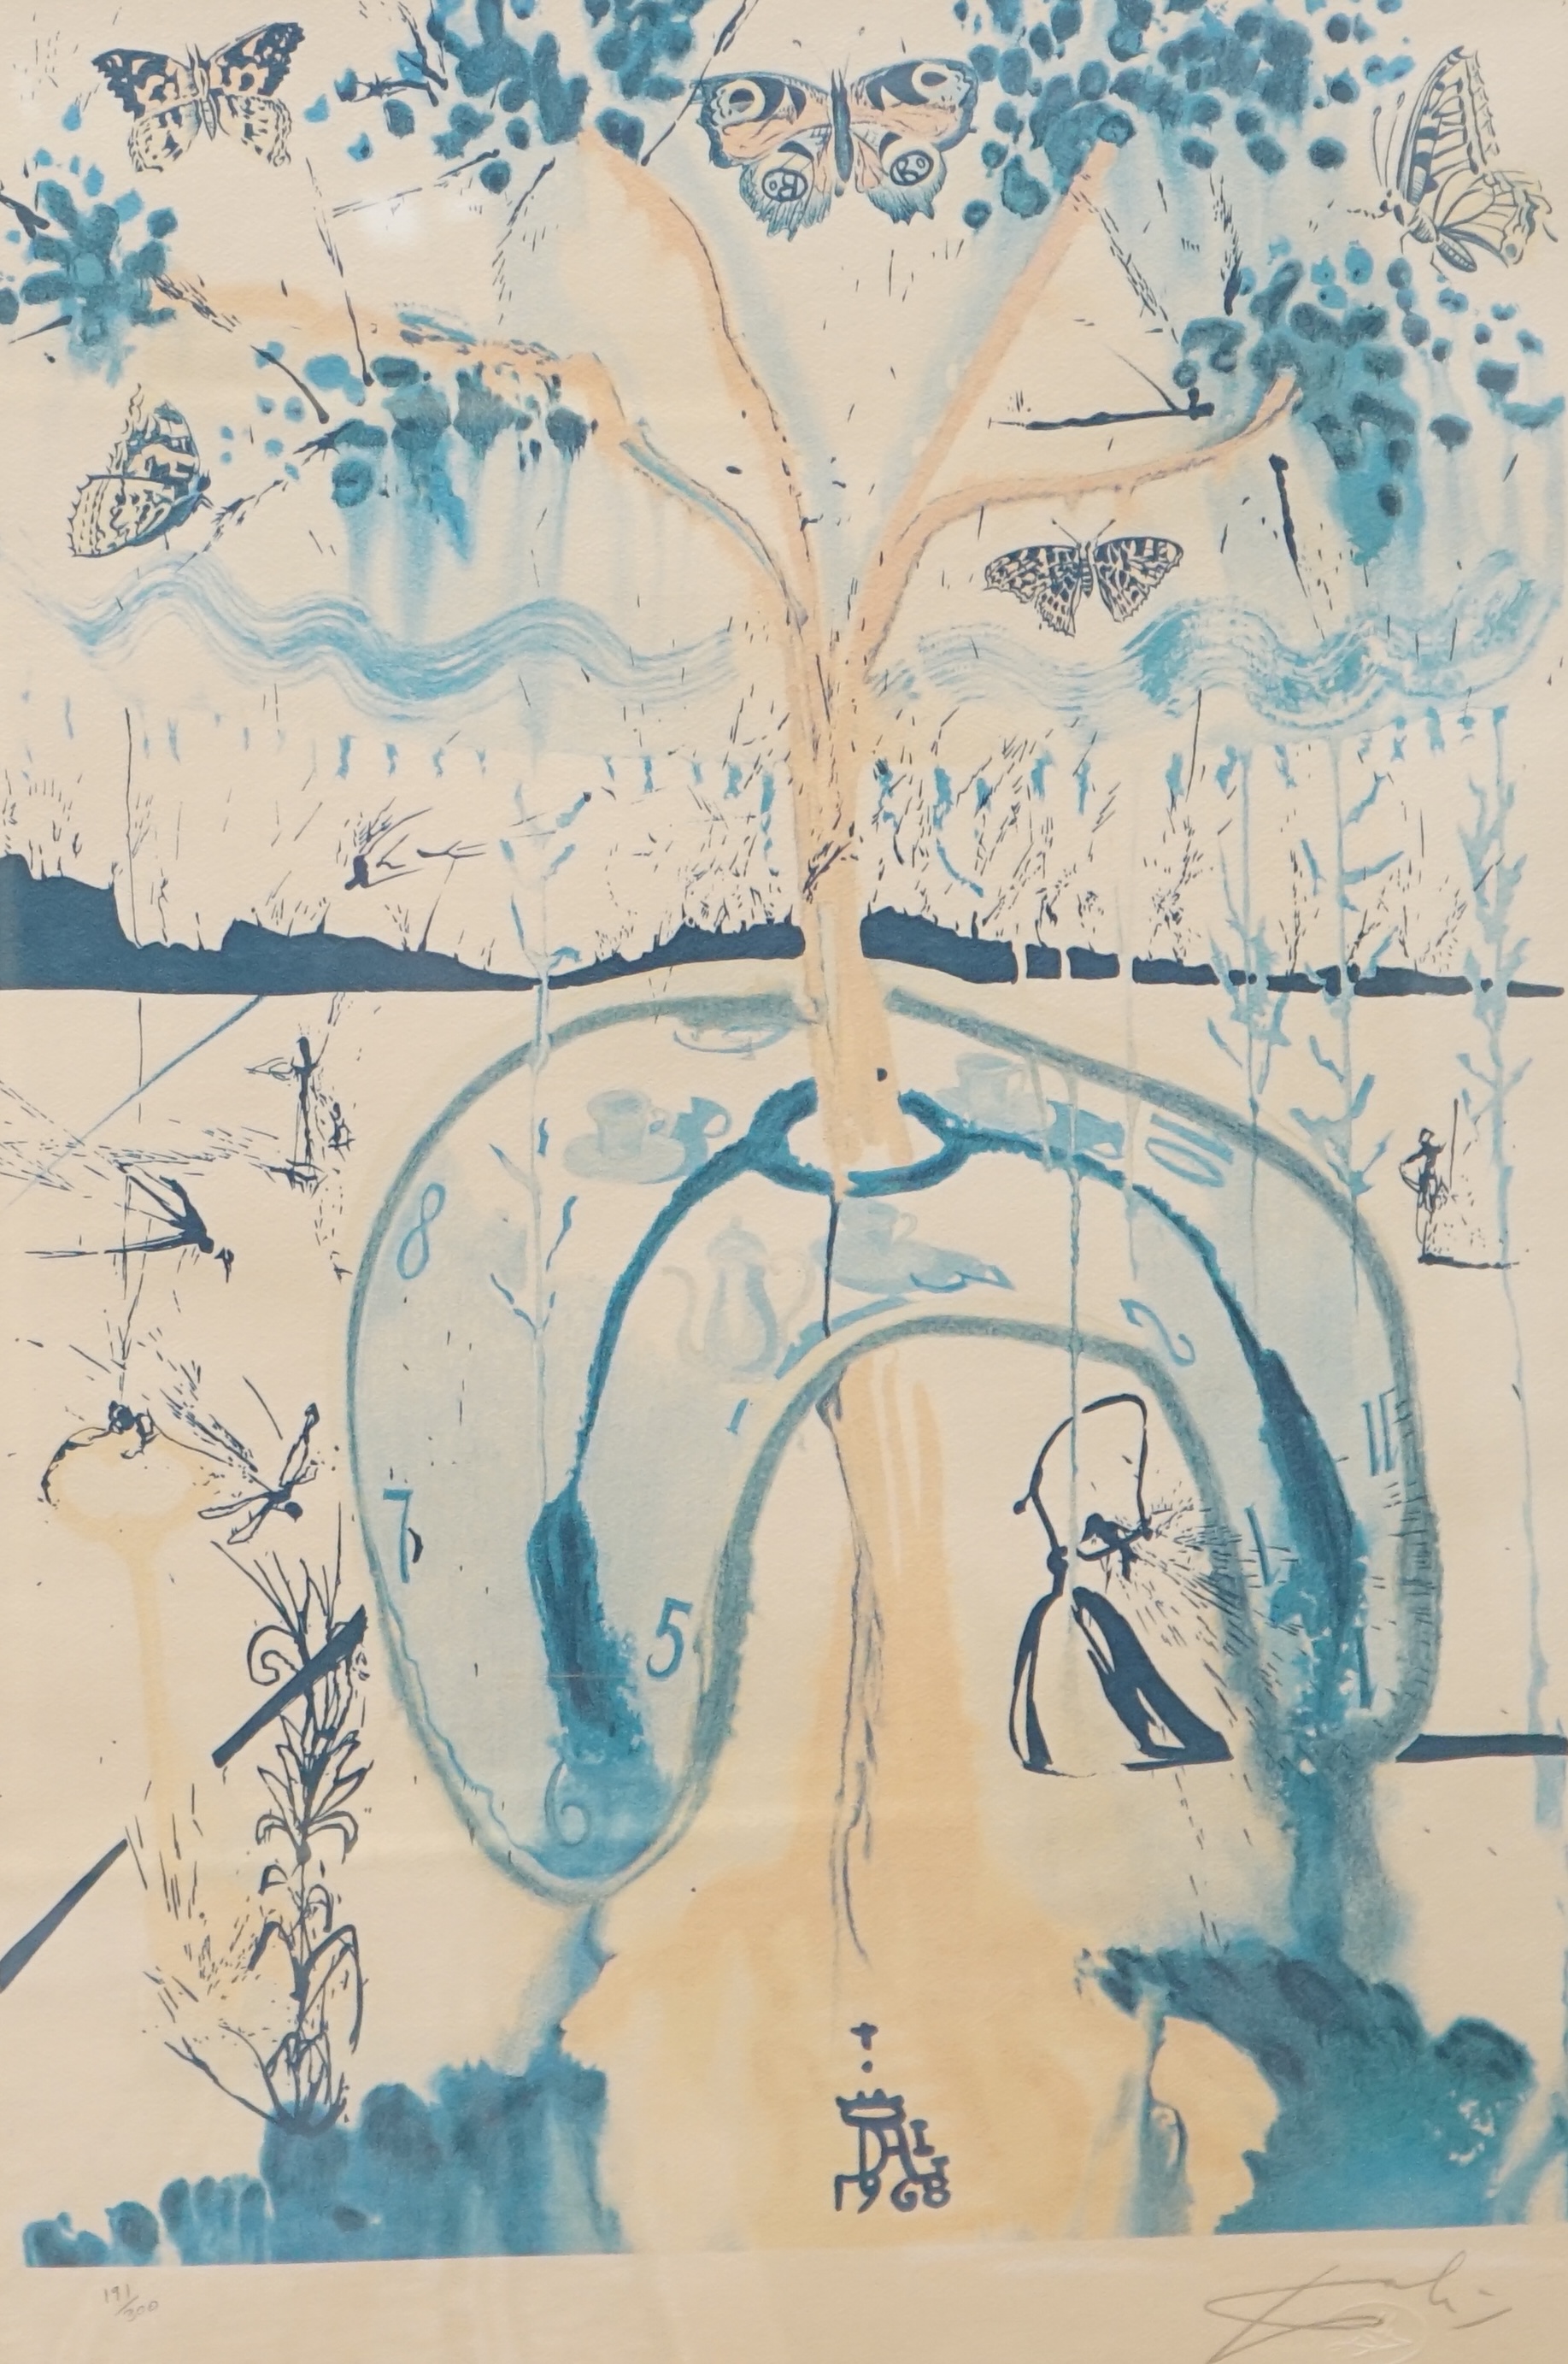 Salvador Dali (Spanish 1904-1989), colour lithograph, Alice in Wonderland, ‘Mad Tea Party’, pencil numbered 191/300, facsimile signature, certificate of authenticity verso 56 x 37cm. Condition - fair